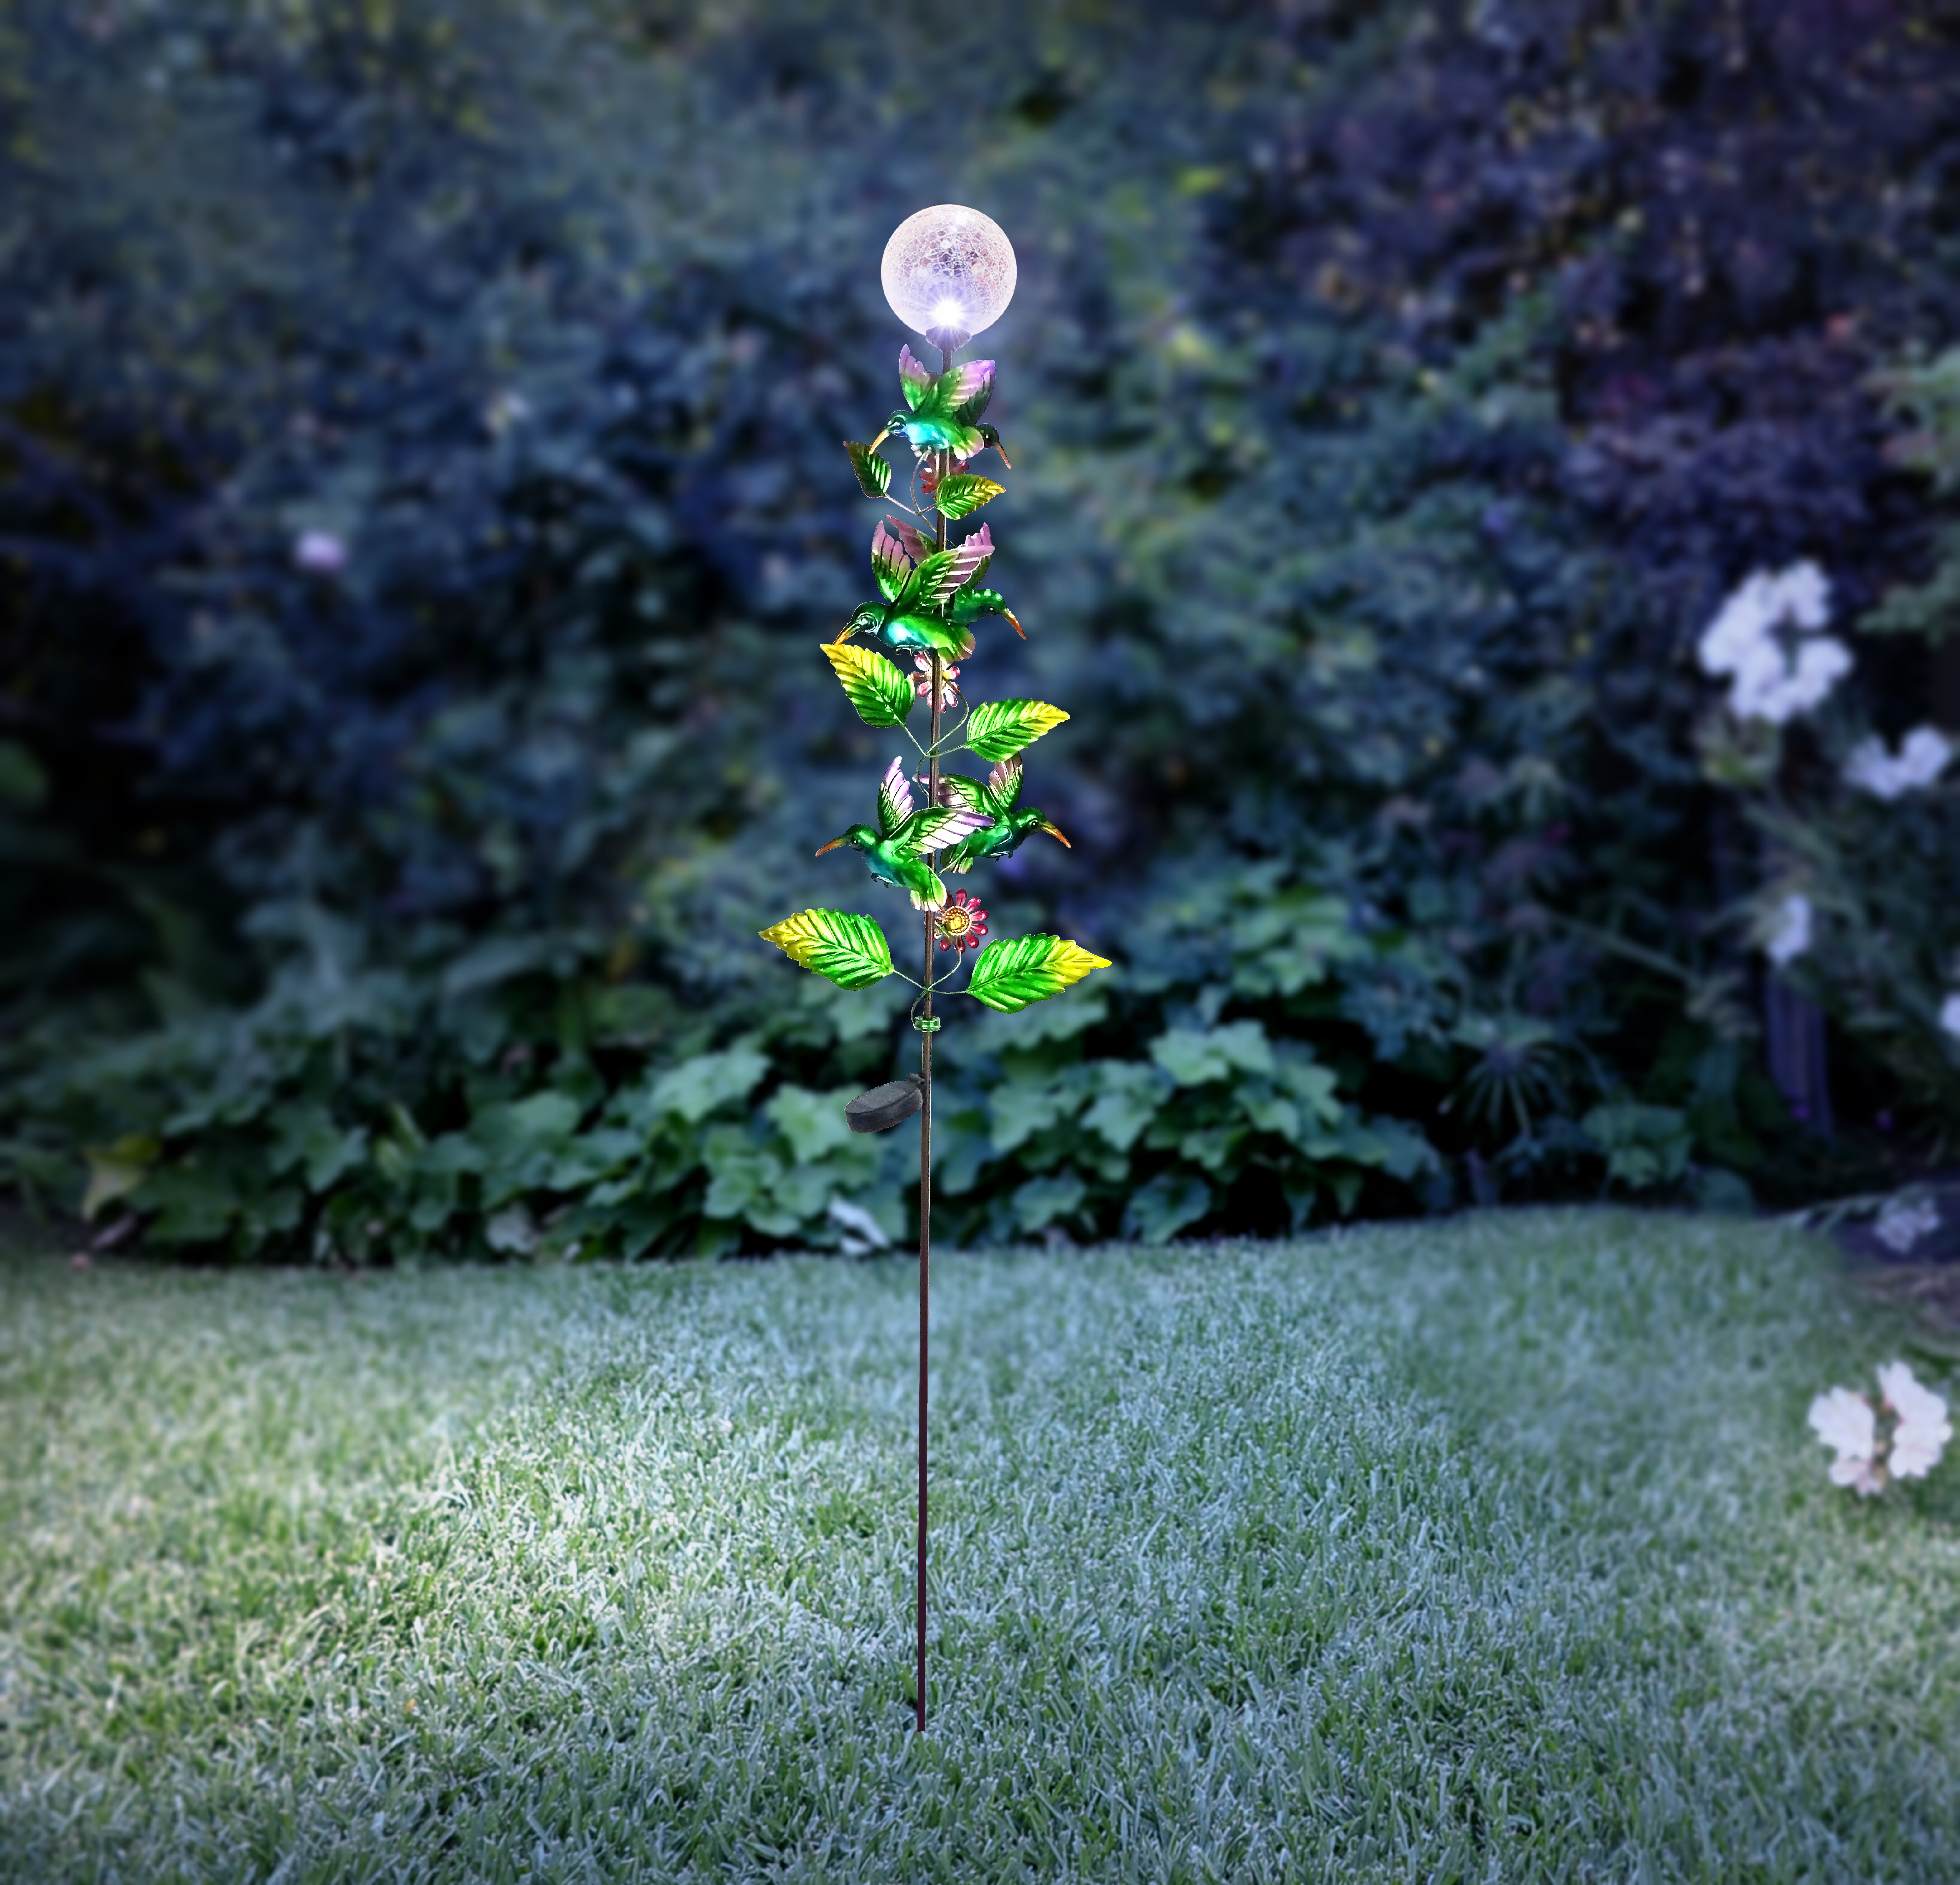 gertrude solar powered ball and metal hummingbird garden stake